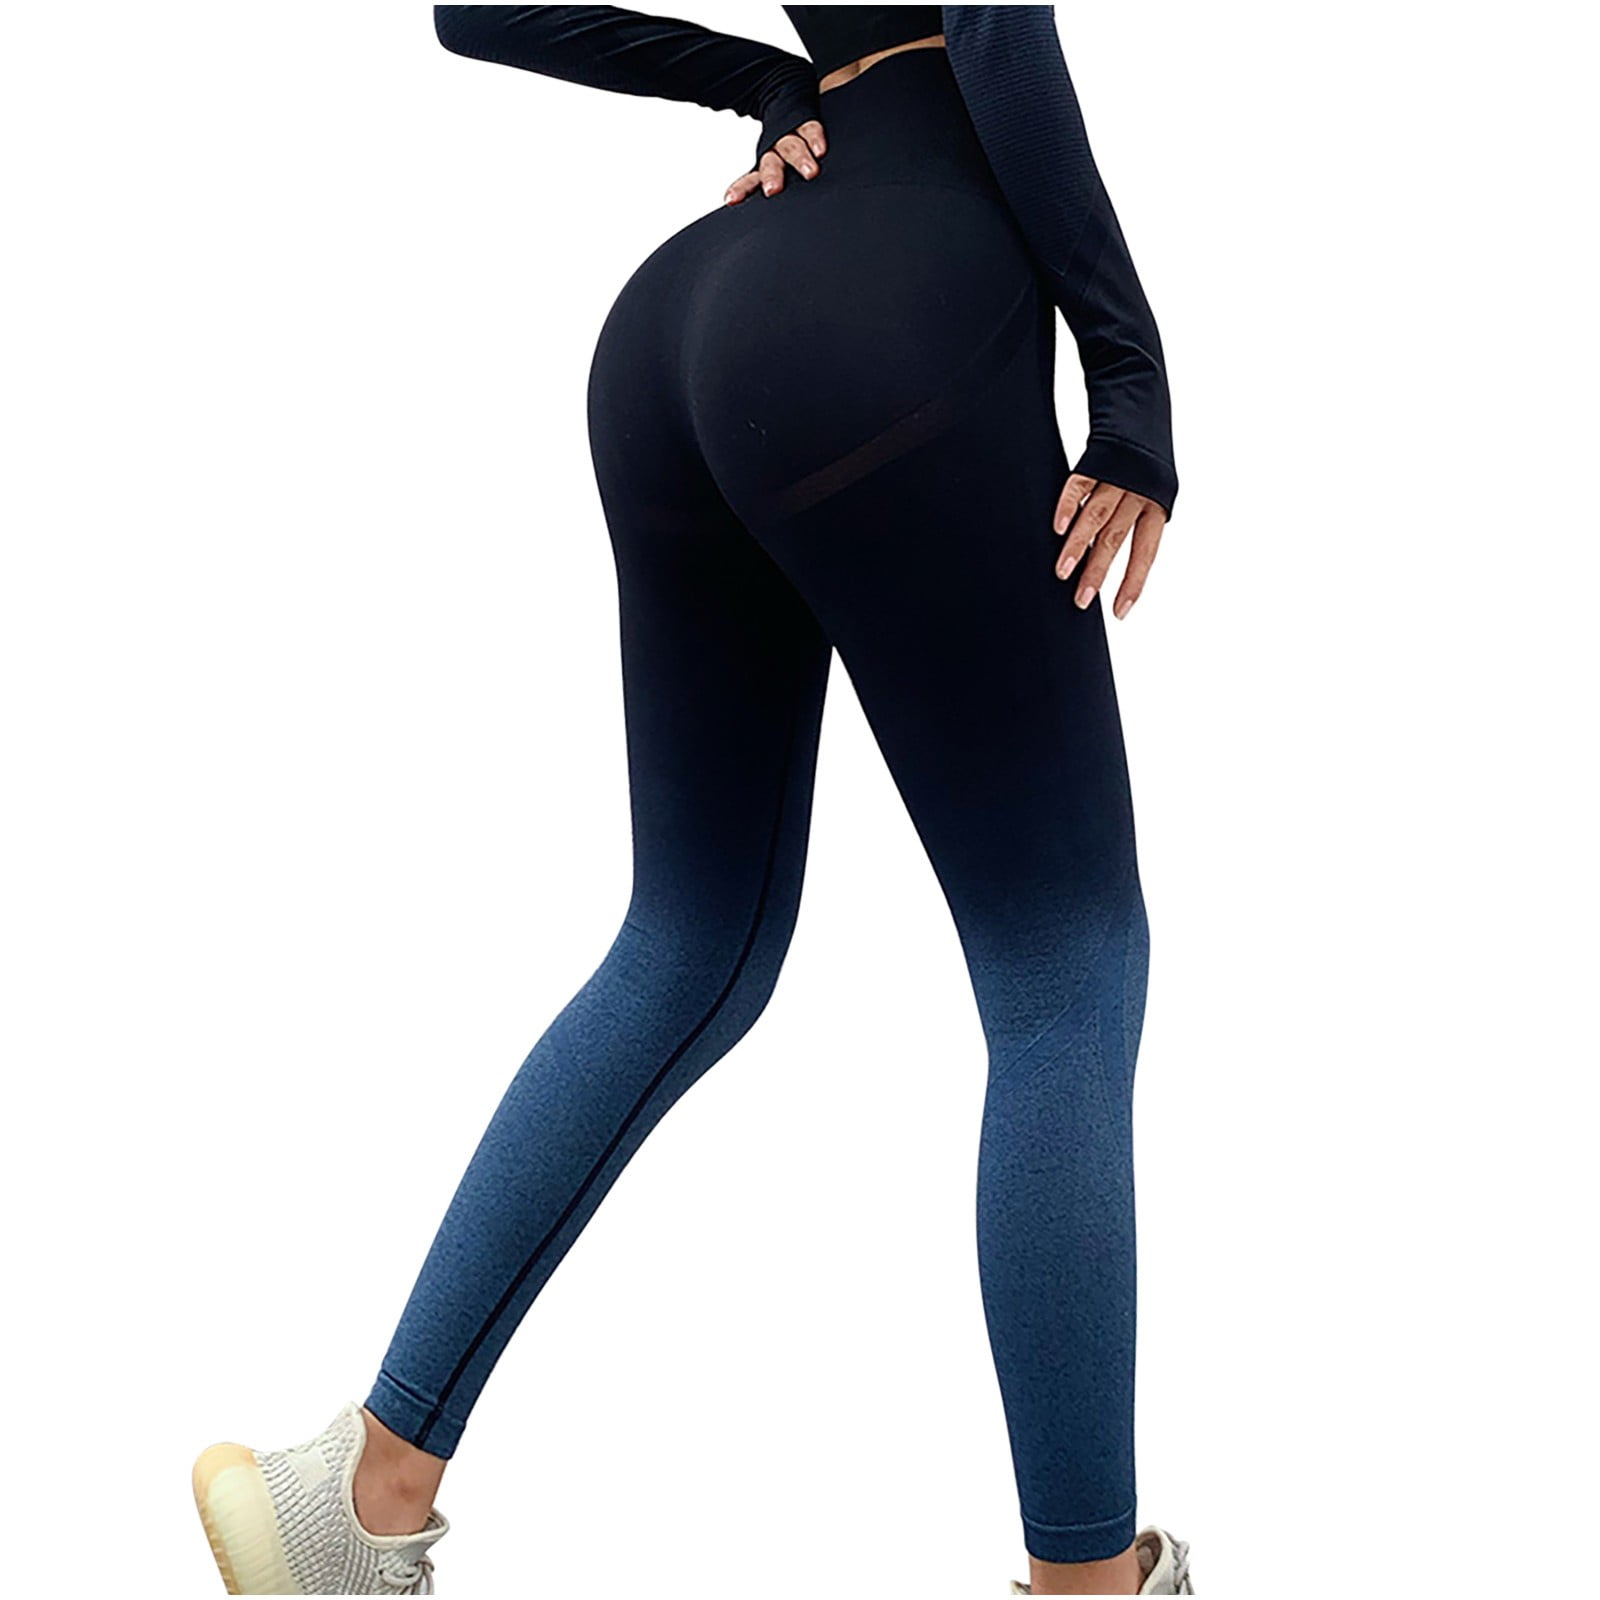 SMihono 4PC Women's Knee Length Leggings High Waist Full Length Long Pants  ed Yoga Workout Exercise Capris For Trendy Casual Summer With Pockets  Female Fashion Gray 12 